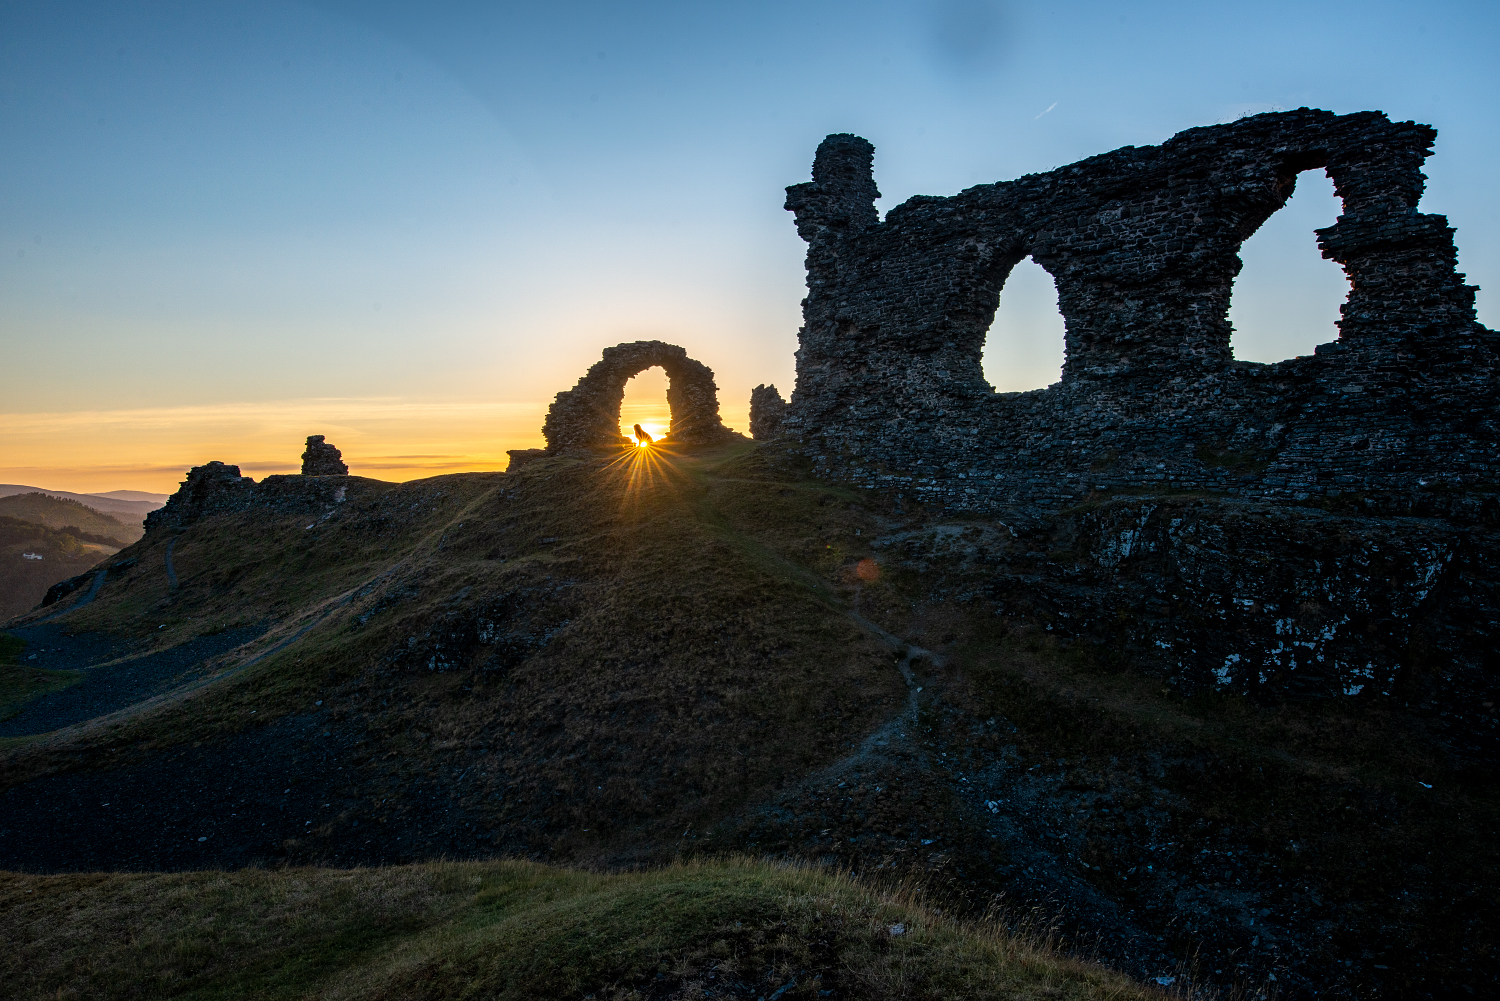 Sonnenuntergang am Castell Dinas Brân in Wales. 